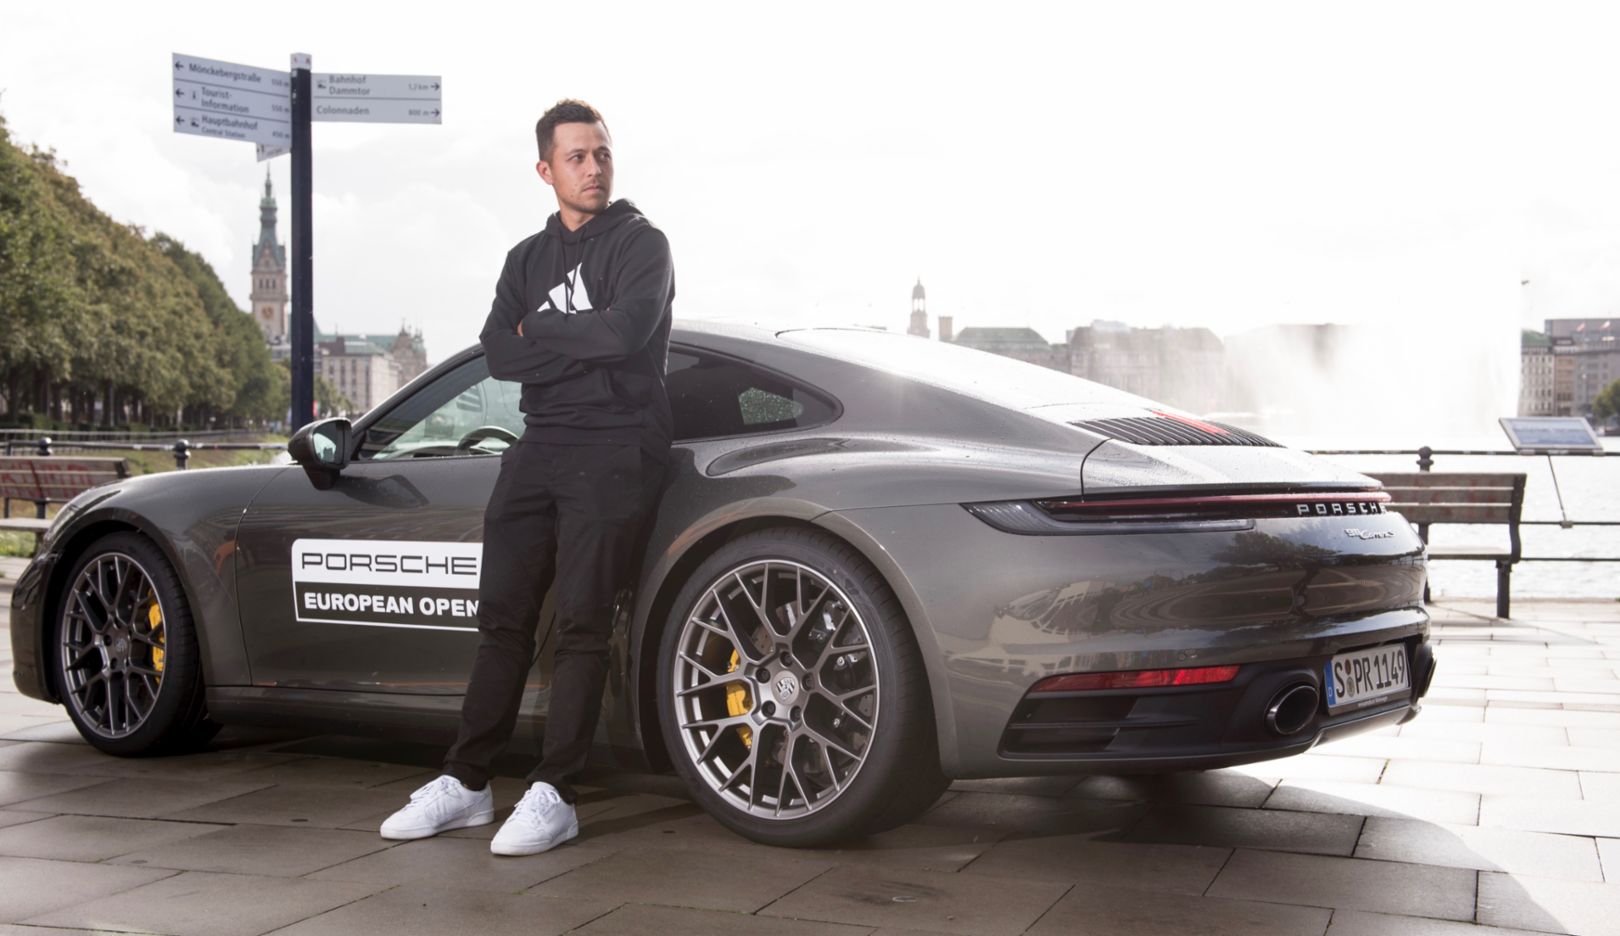 Xander Schauffele (USA), Golfer, 911 Carrera S, Porsche European Open, Hamburg, 2019, Porsche AG